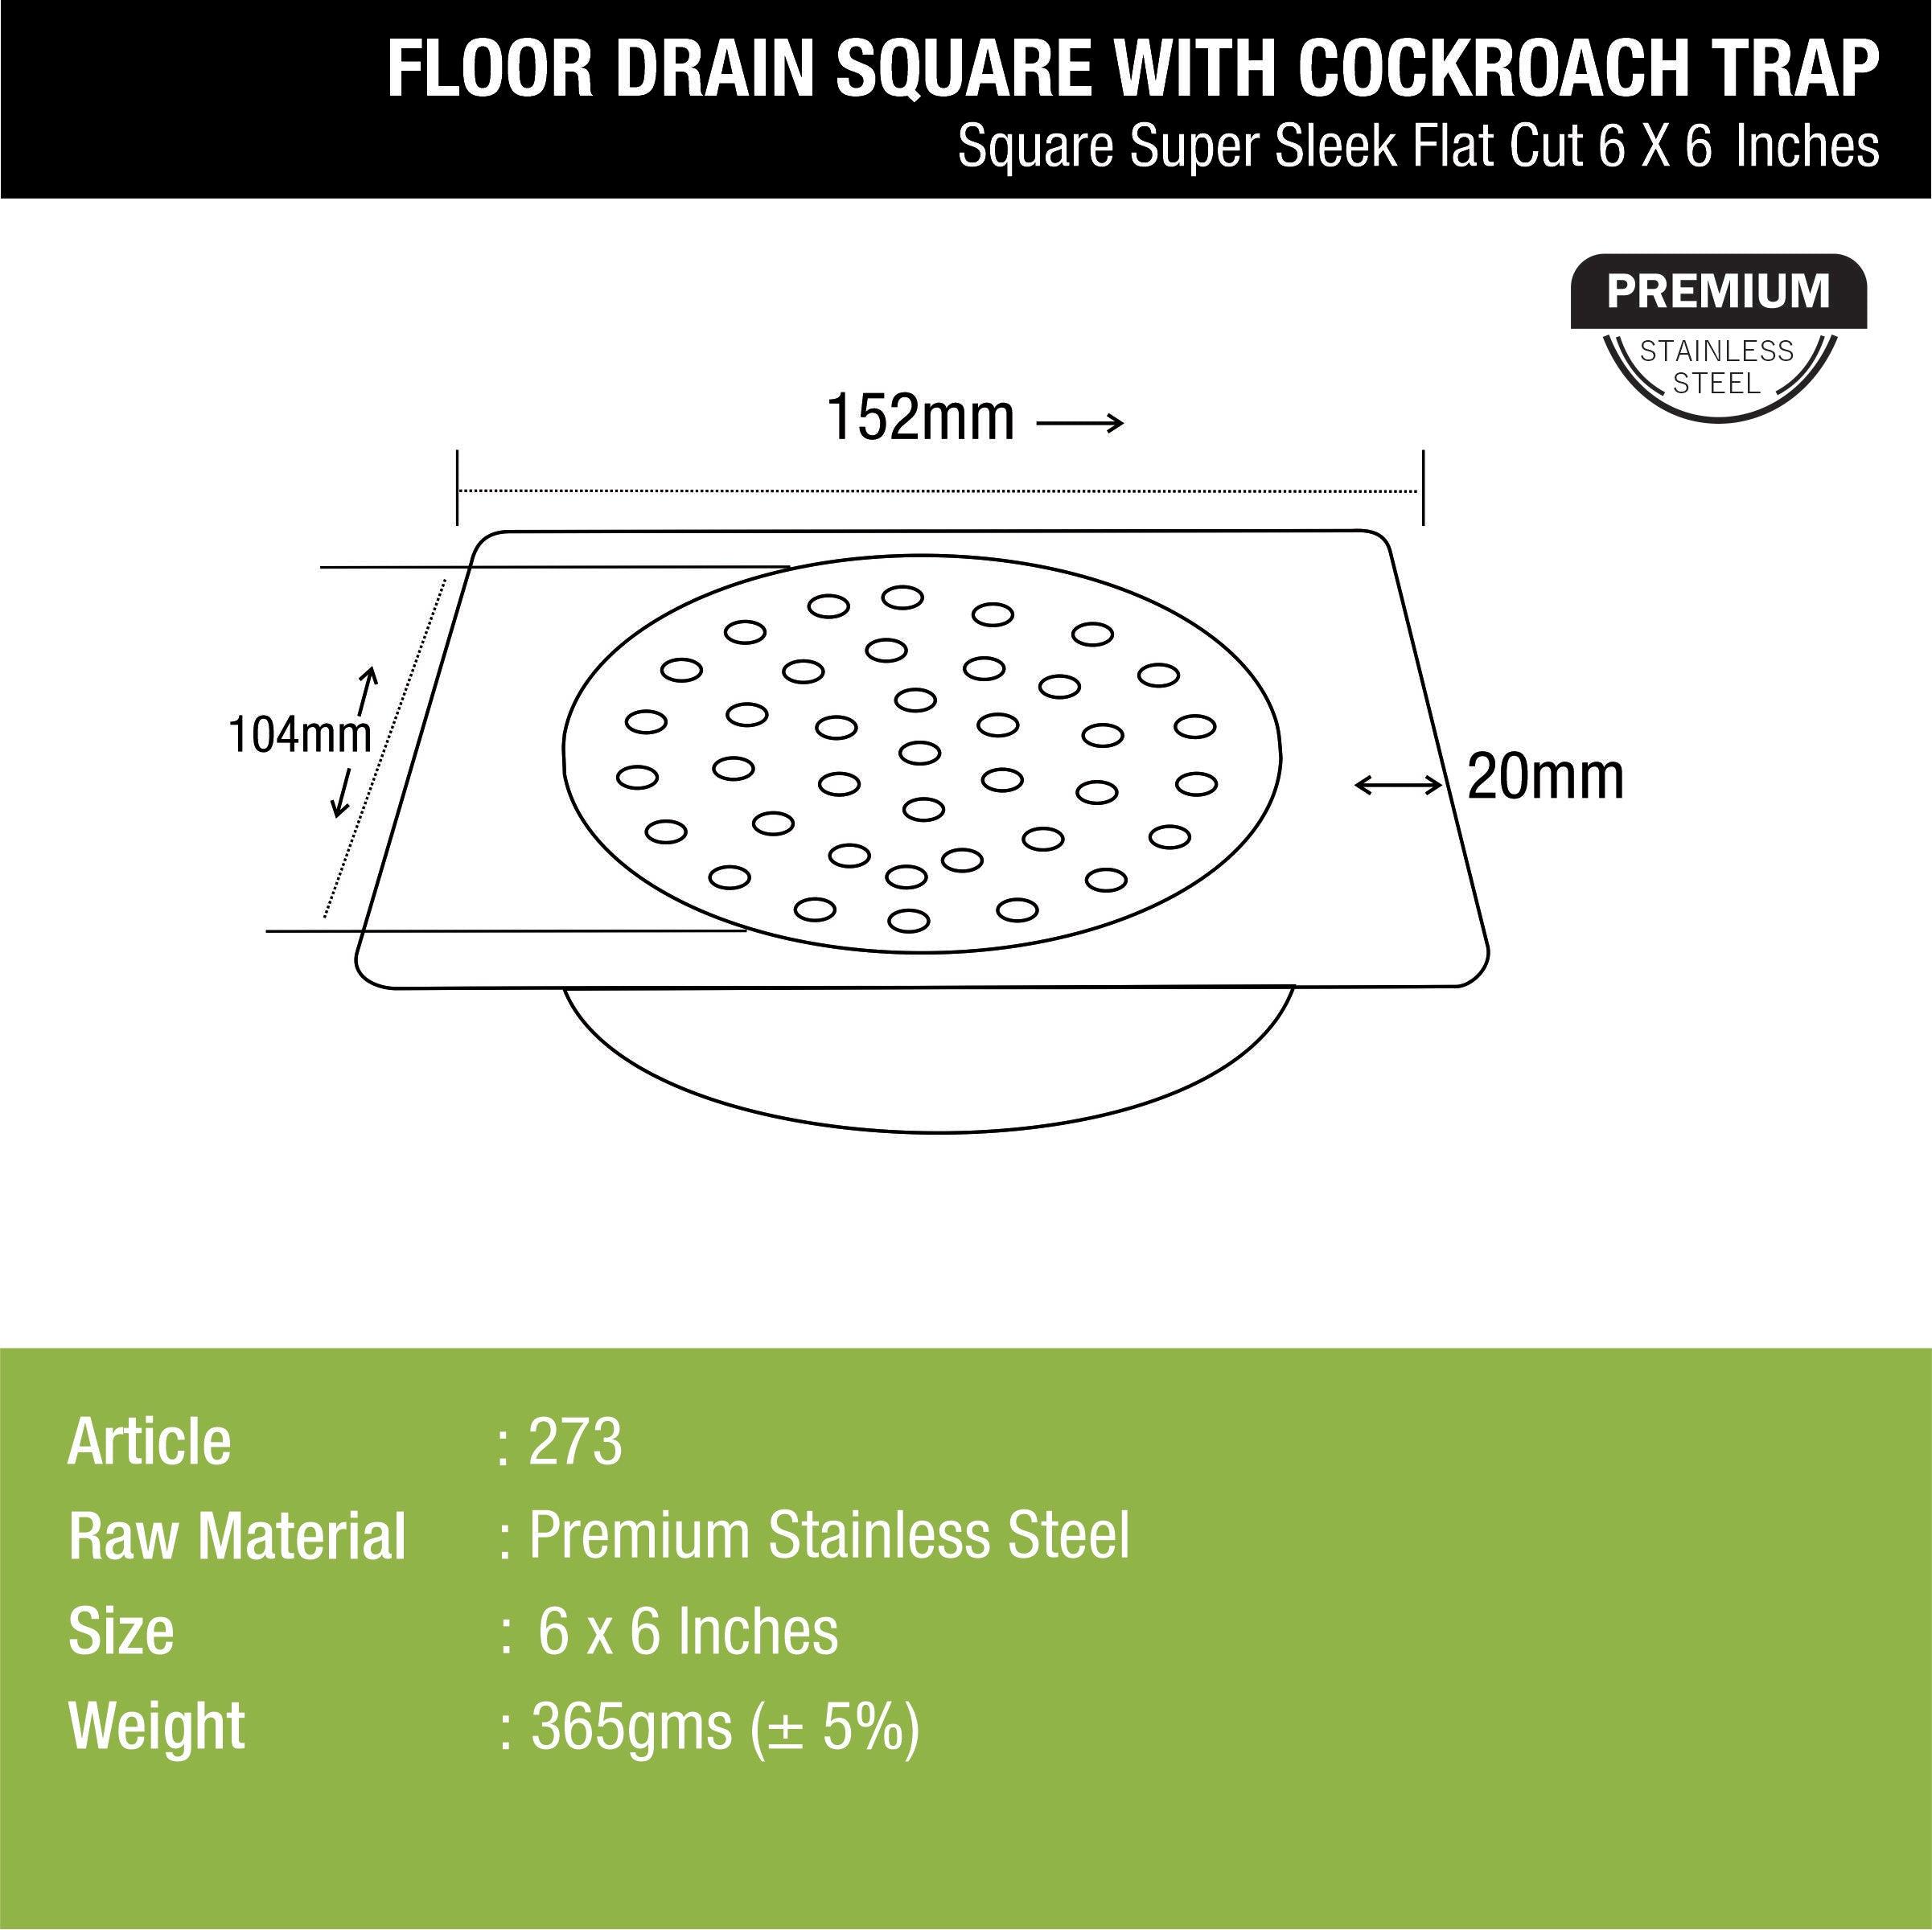 Super Sleek Square Flat Cut Floor Drain (6 x 6 Inches) with Cockroach Trap - LIPKA